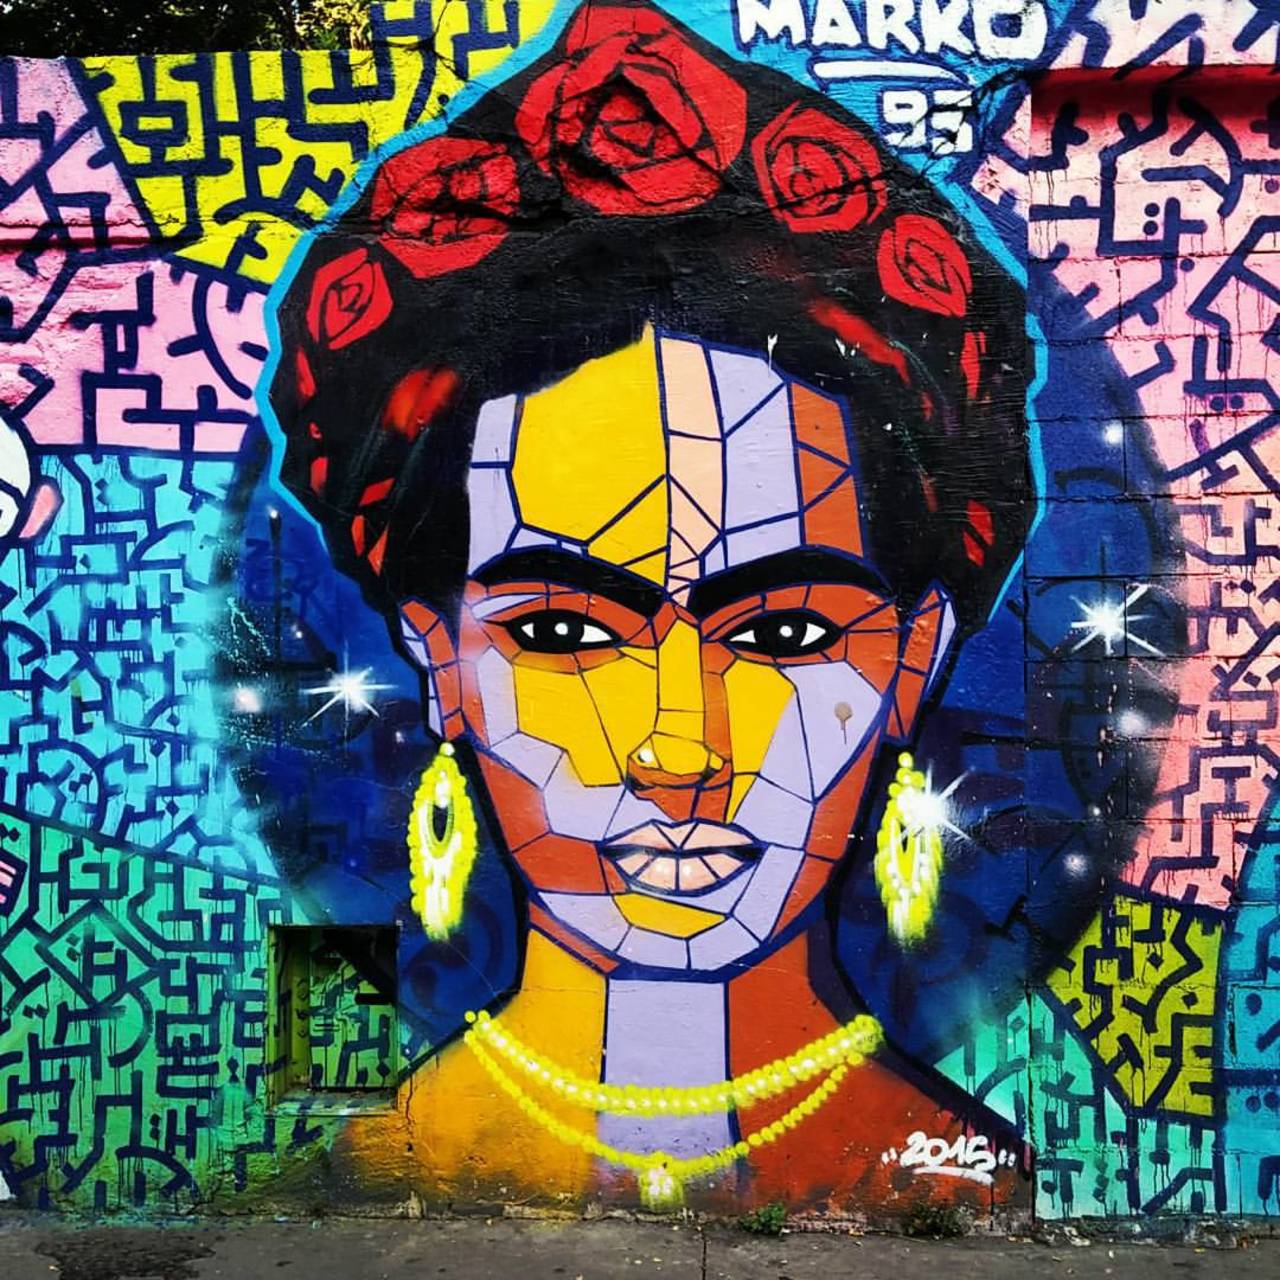 RT @Brindille_: #Streetart #urbanart #graffiti #mural "Frida Kahlo", 2015 de l'artiste Marko, #Paris France
Photo Jean-Noël Chauvelot http://t.co/4O0x8uc3Dr